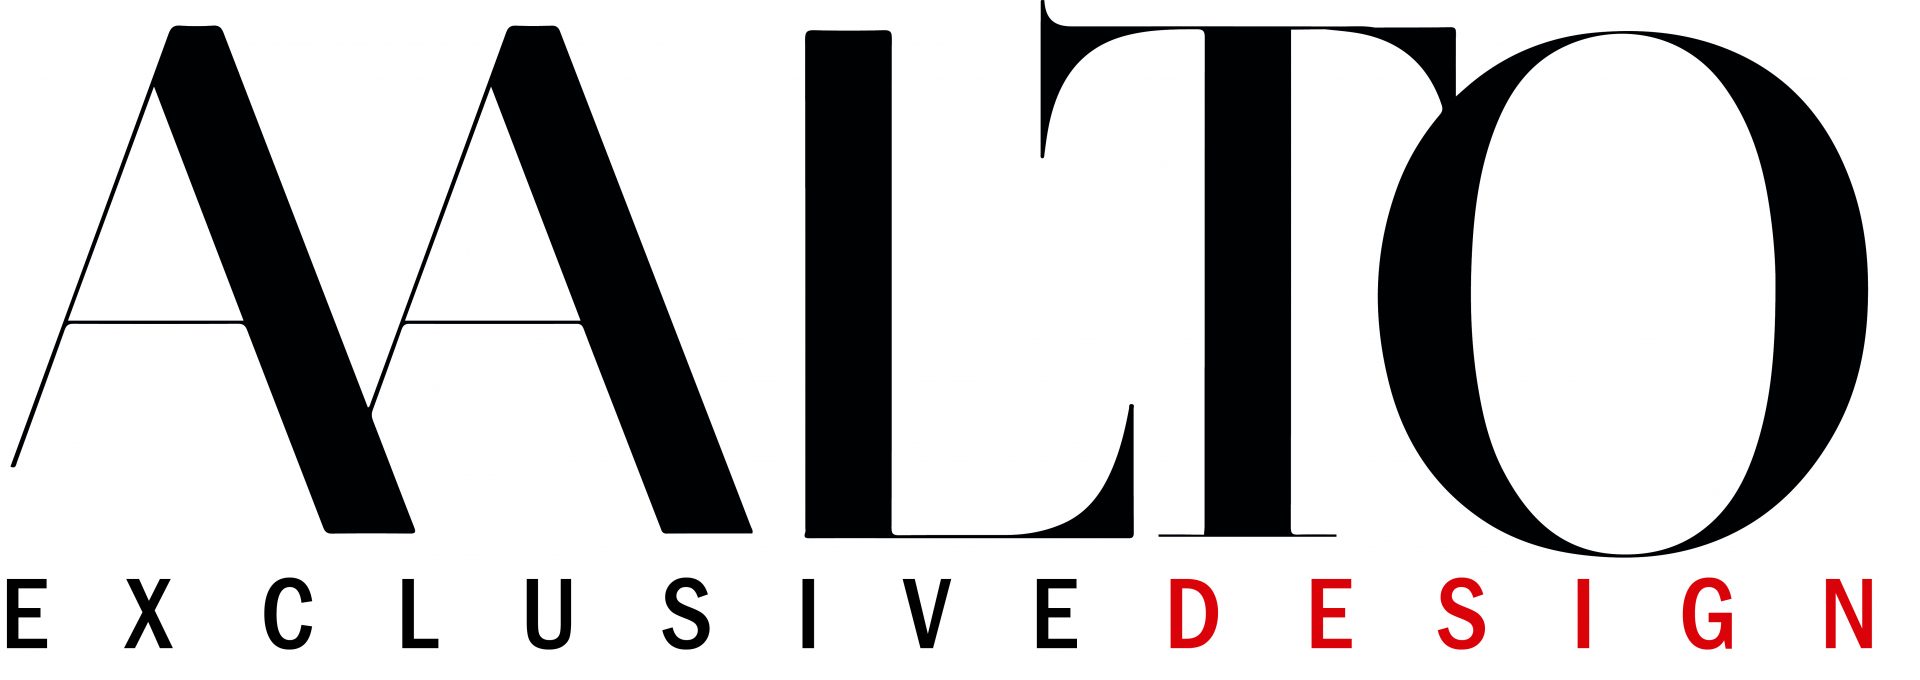 AALTO Exclusive Design - Luxury Lifestyle Awards